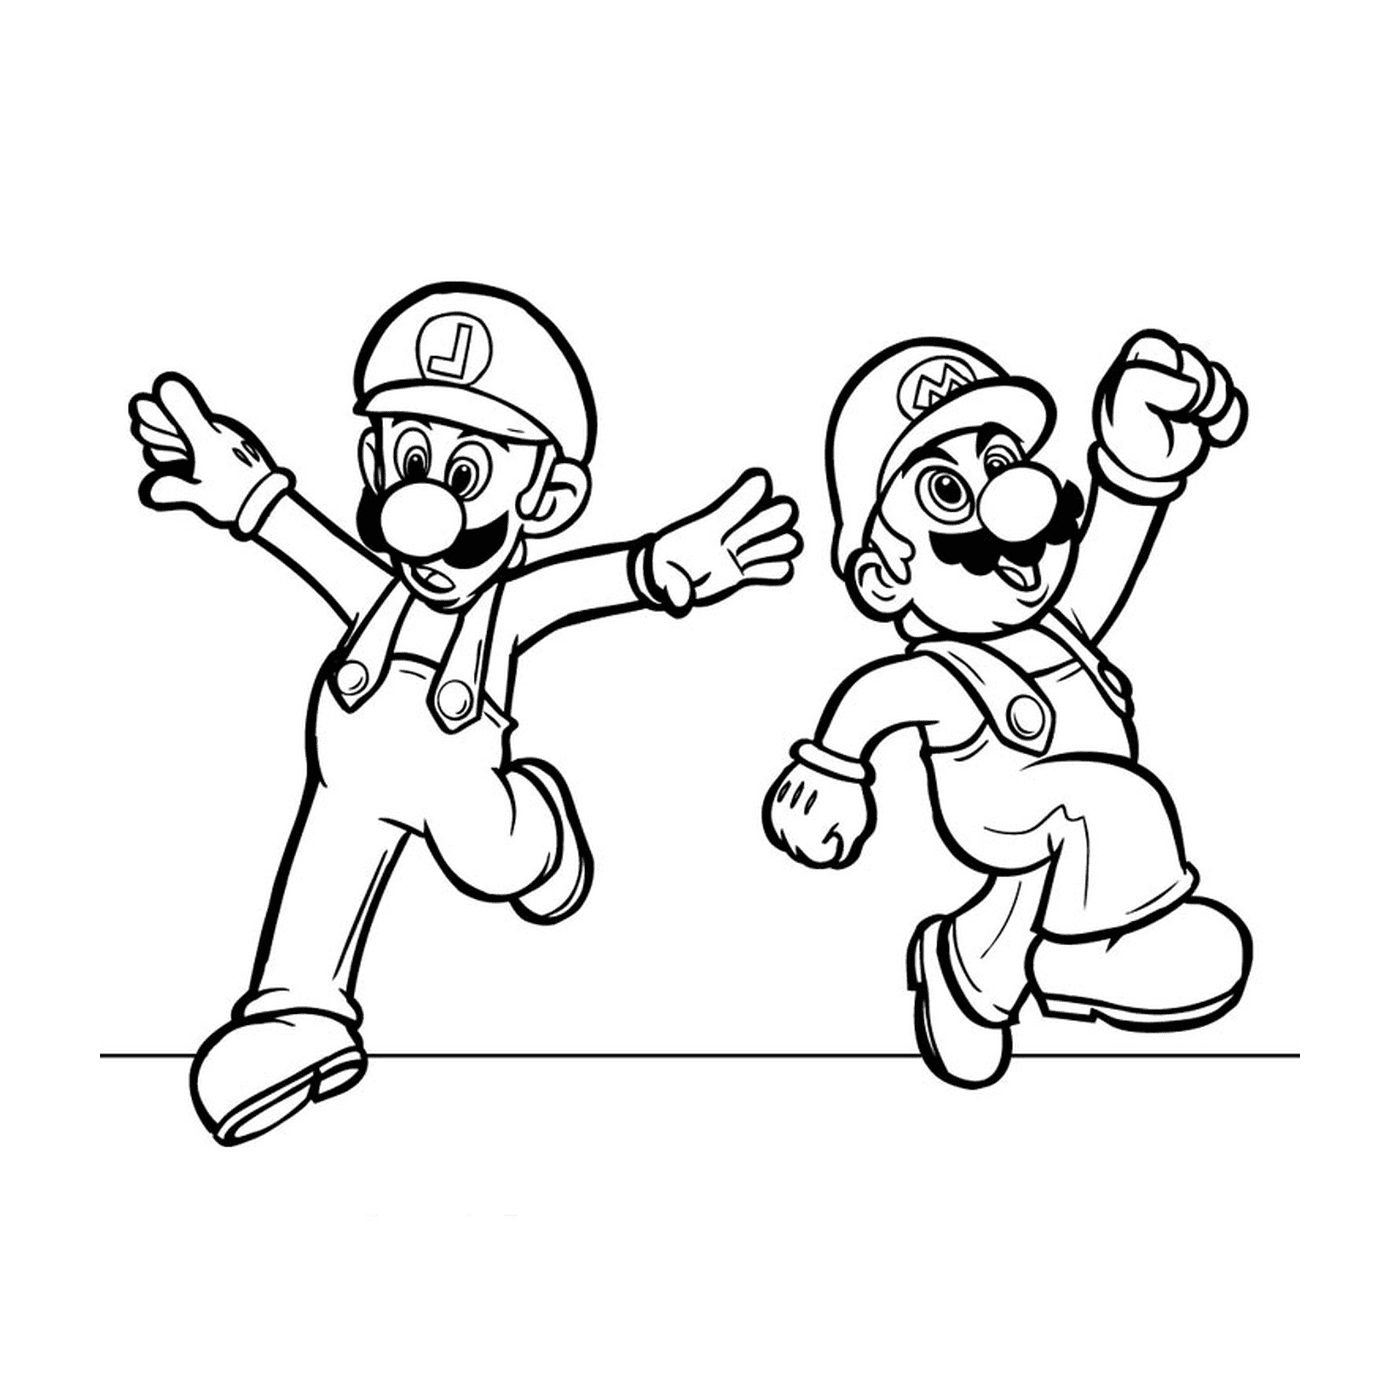  Mario and Luigi together 